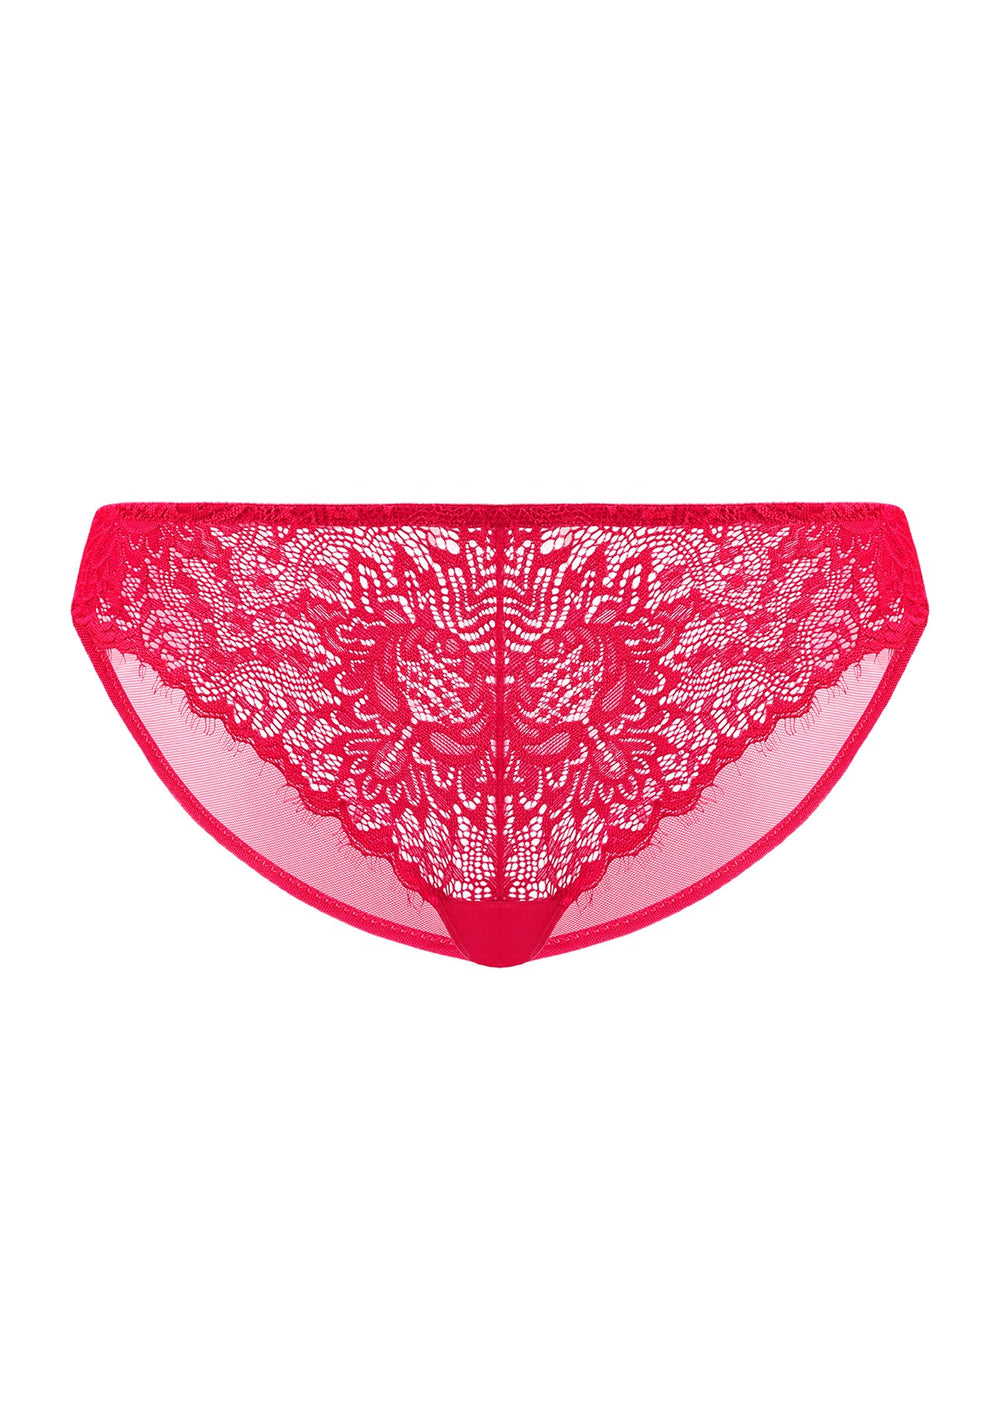 HSIA Sunflower Exquisite Lace Bikini Underwear